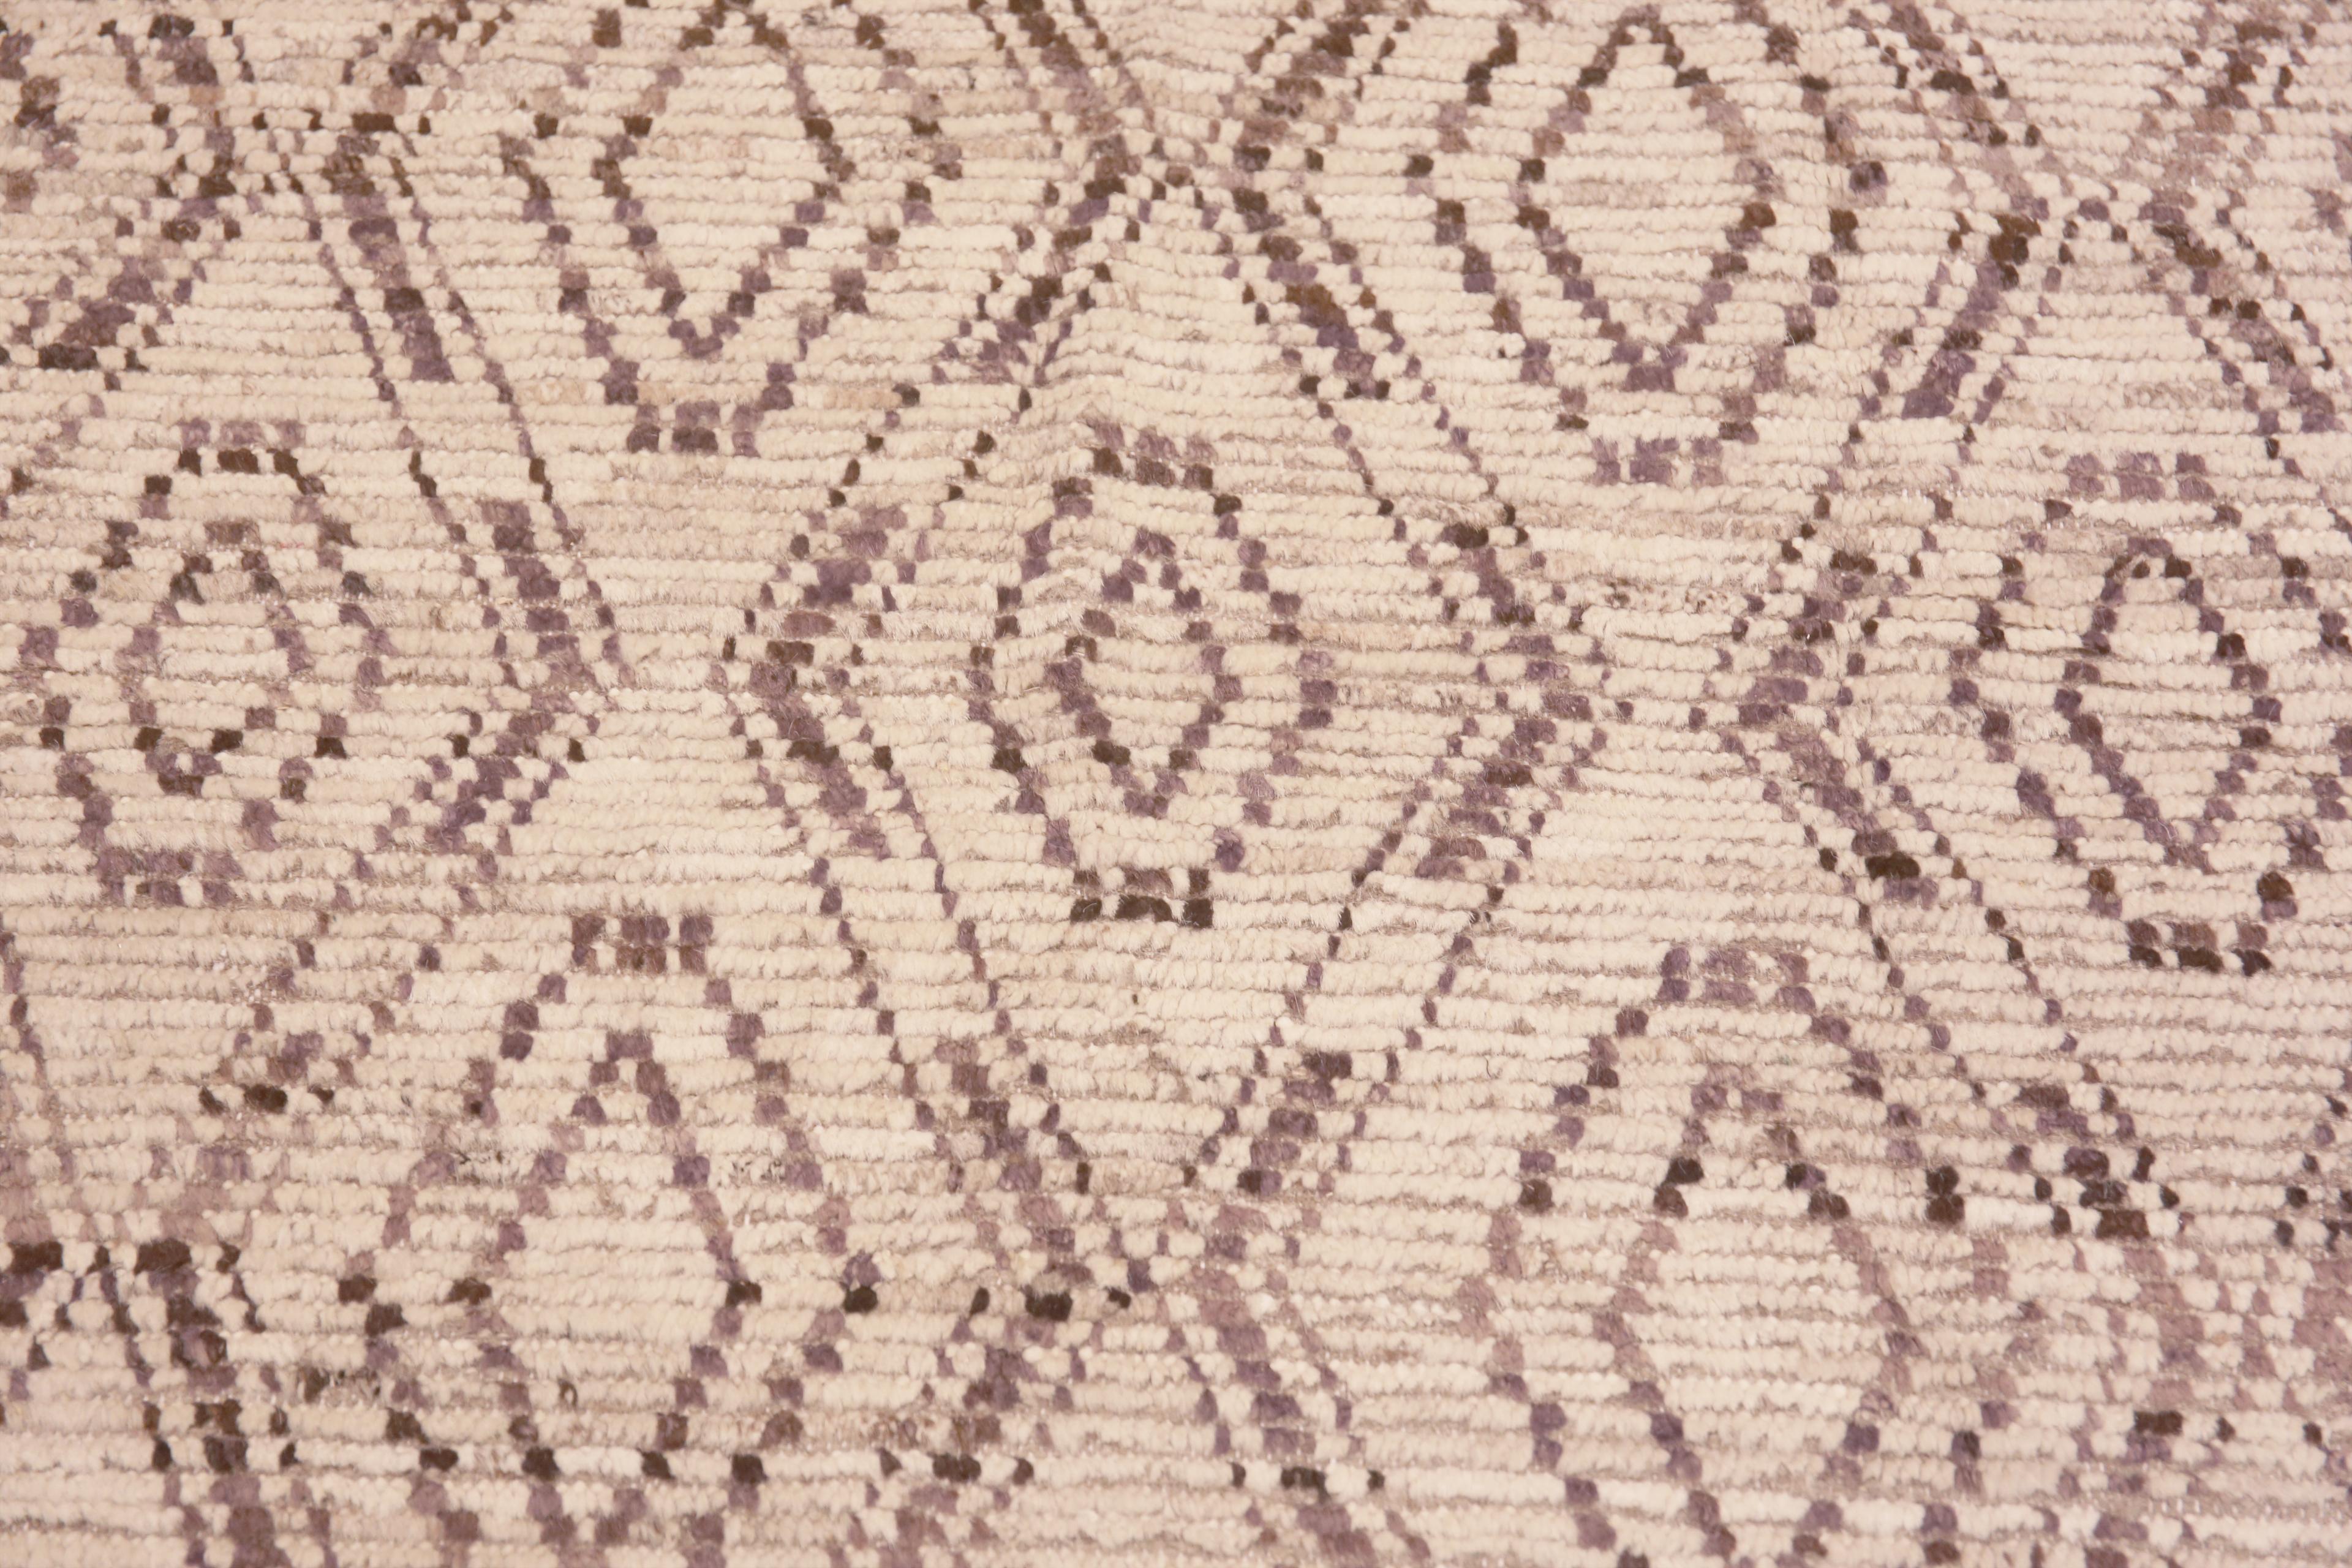 Wool Nazmiyal Collection Geometric Lozenge Design Modern Chic Rug 12' x 14'11